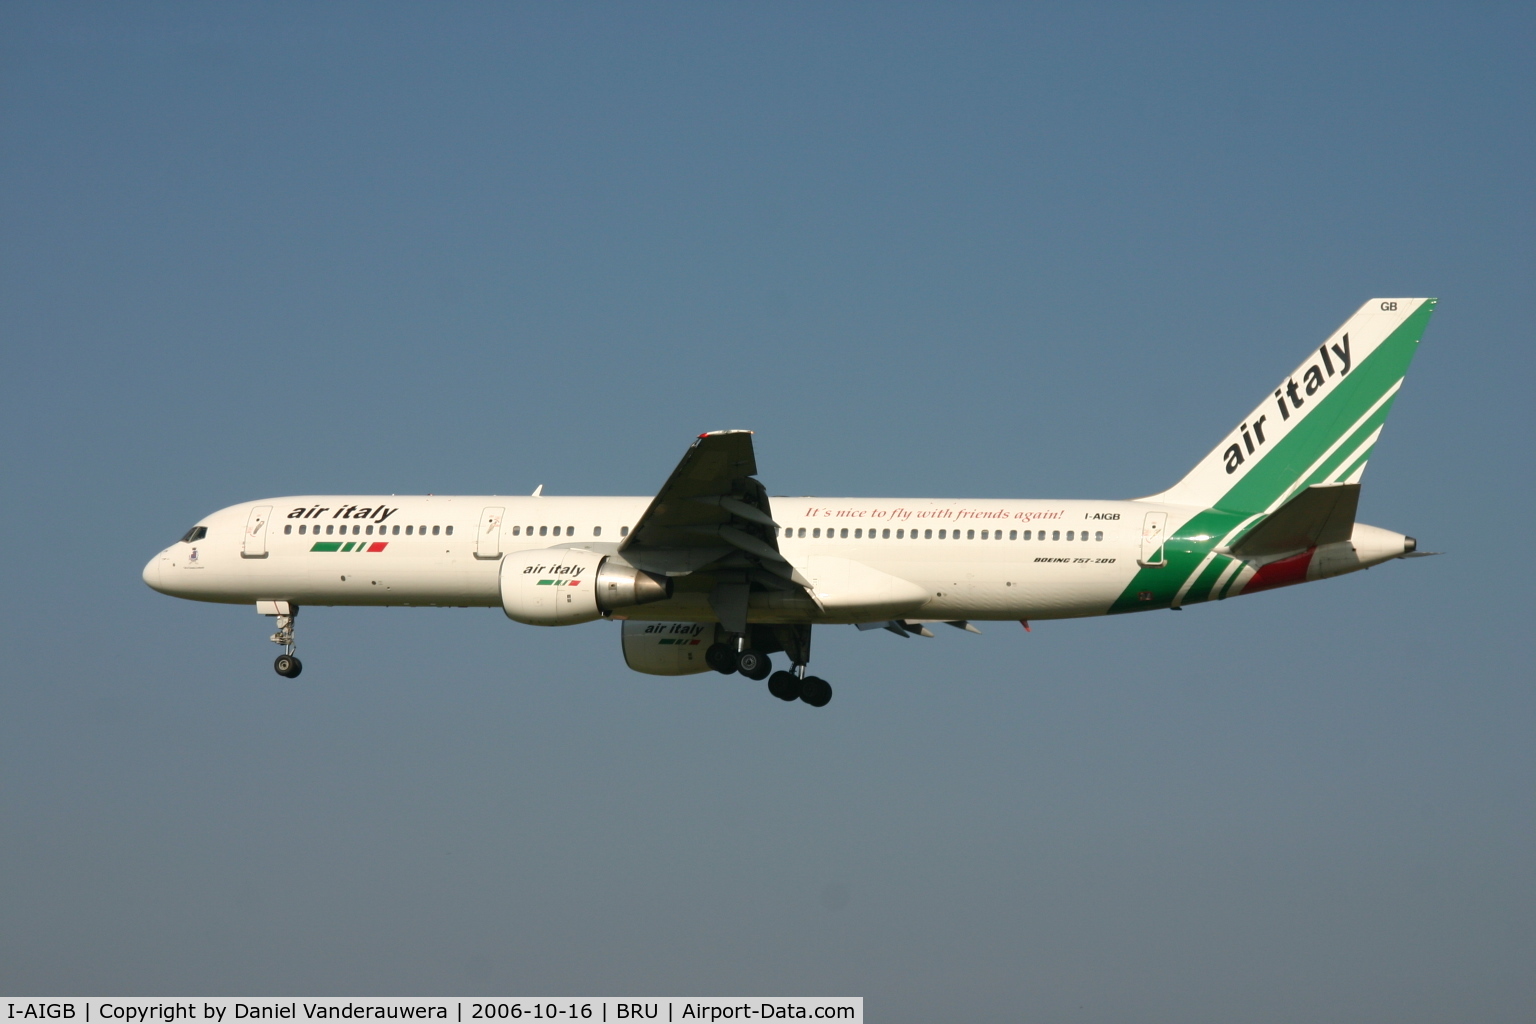 I-AIGB, 1990 Boeing 757-230/SF C/N 24738, arrival of Italian soccer team